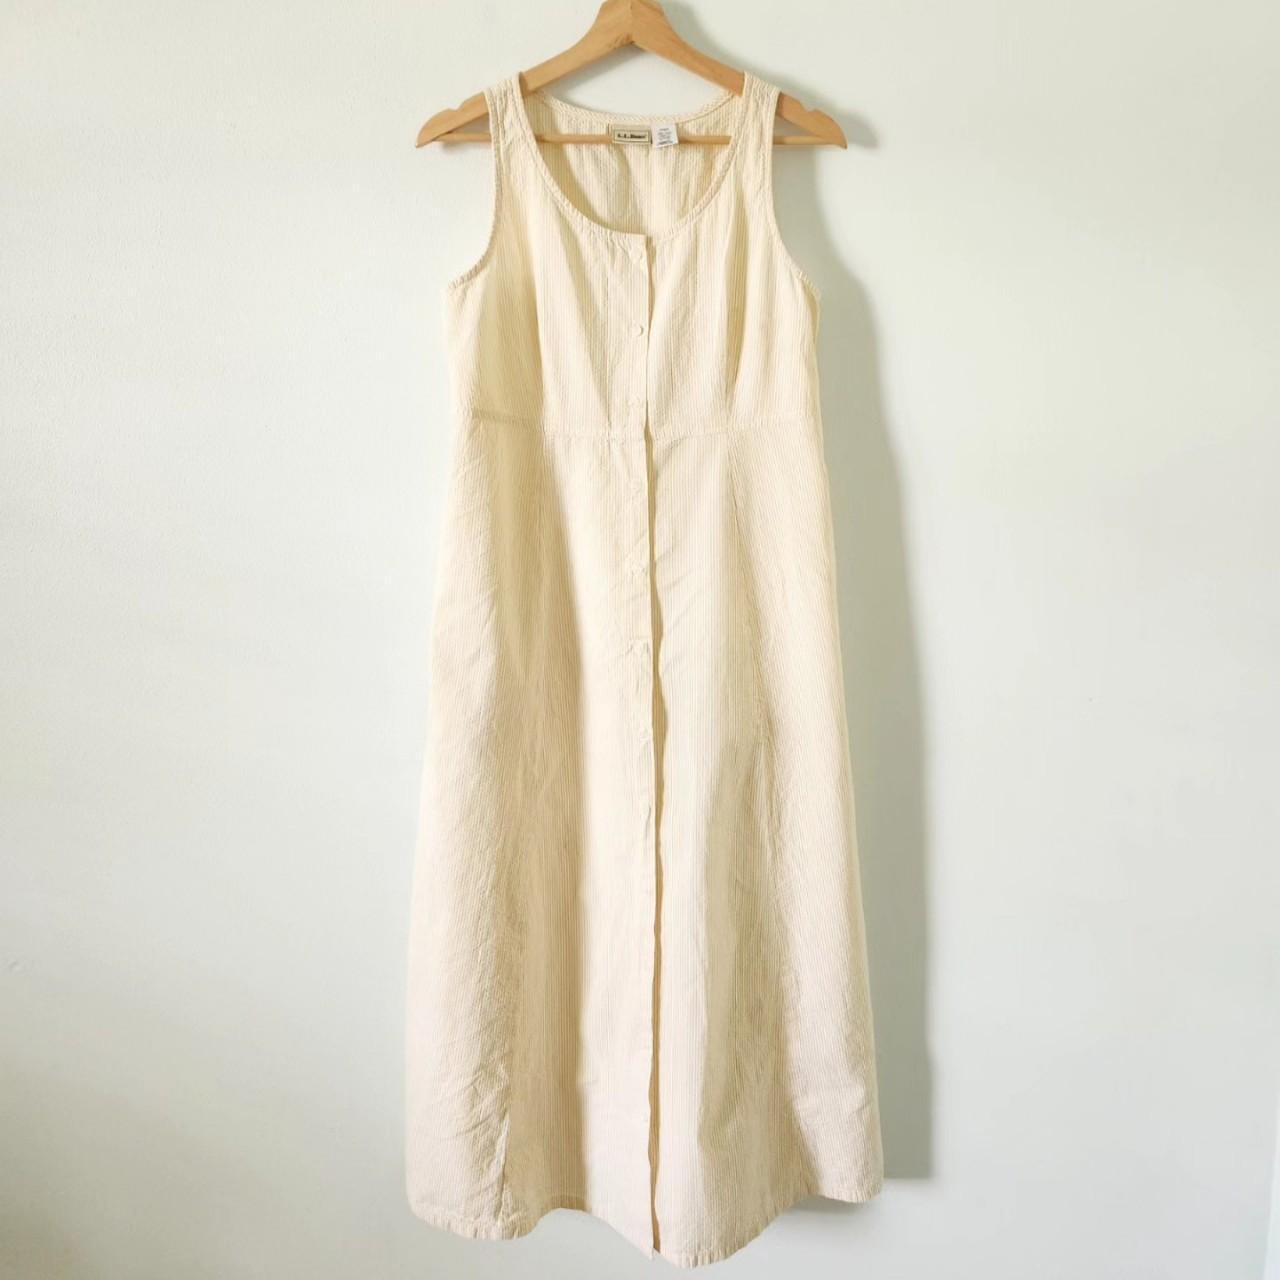 L.L.Bean Women's White and Orange Dress (2)